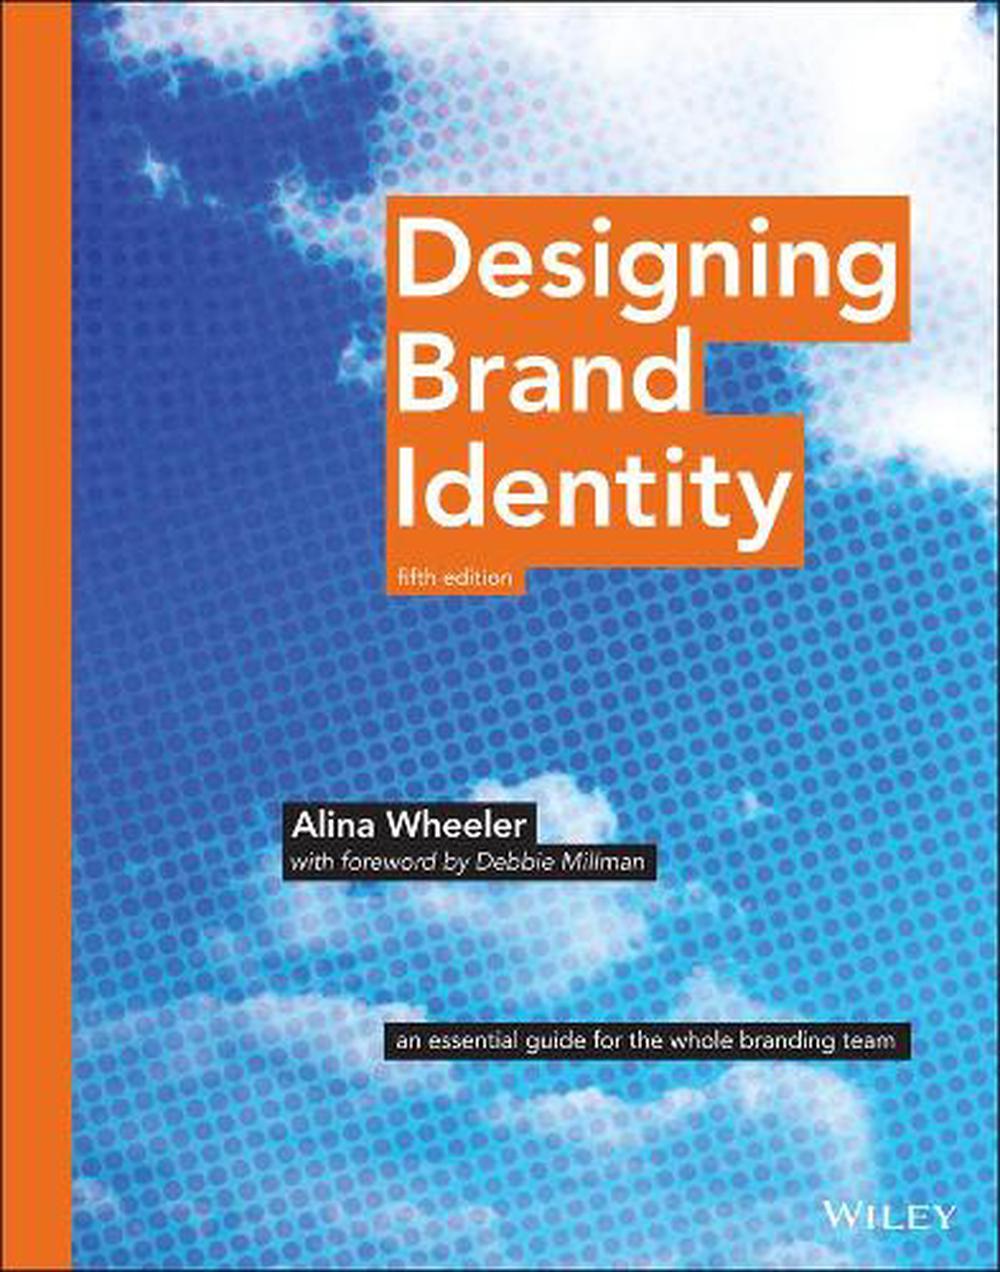 designing brand identity 5th edition pdf free download